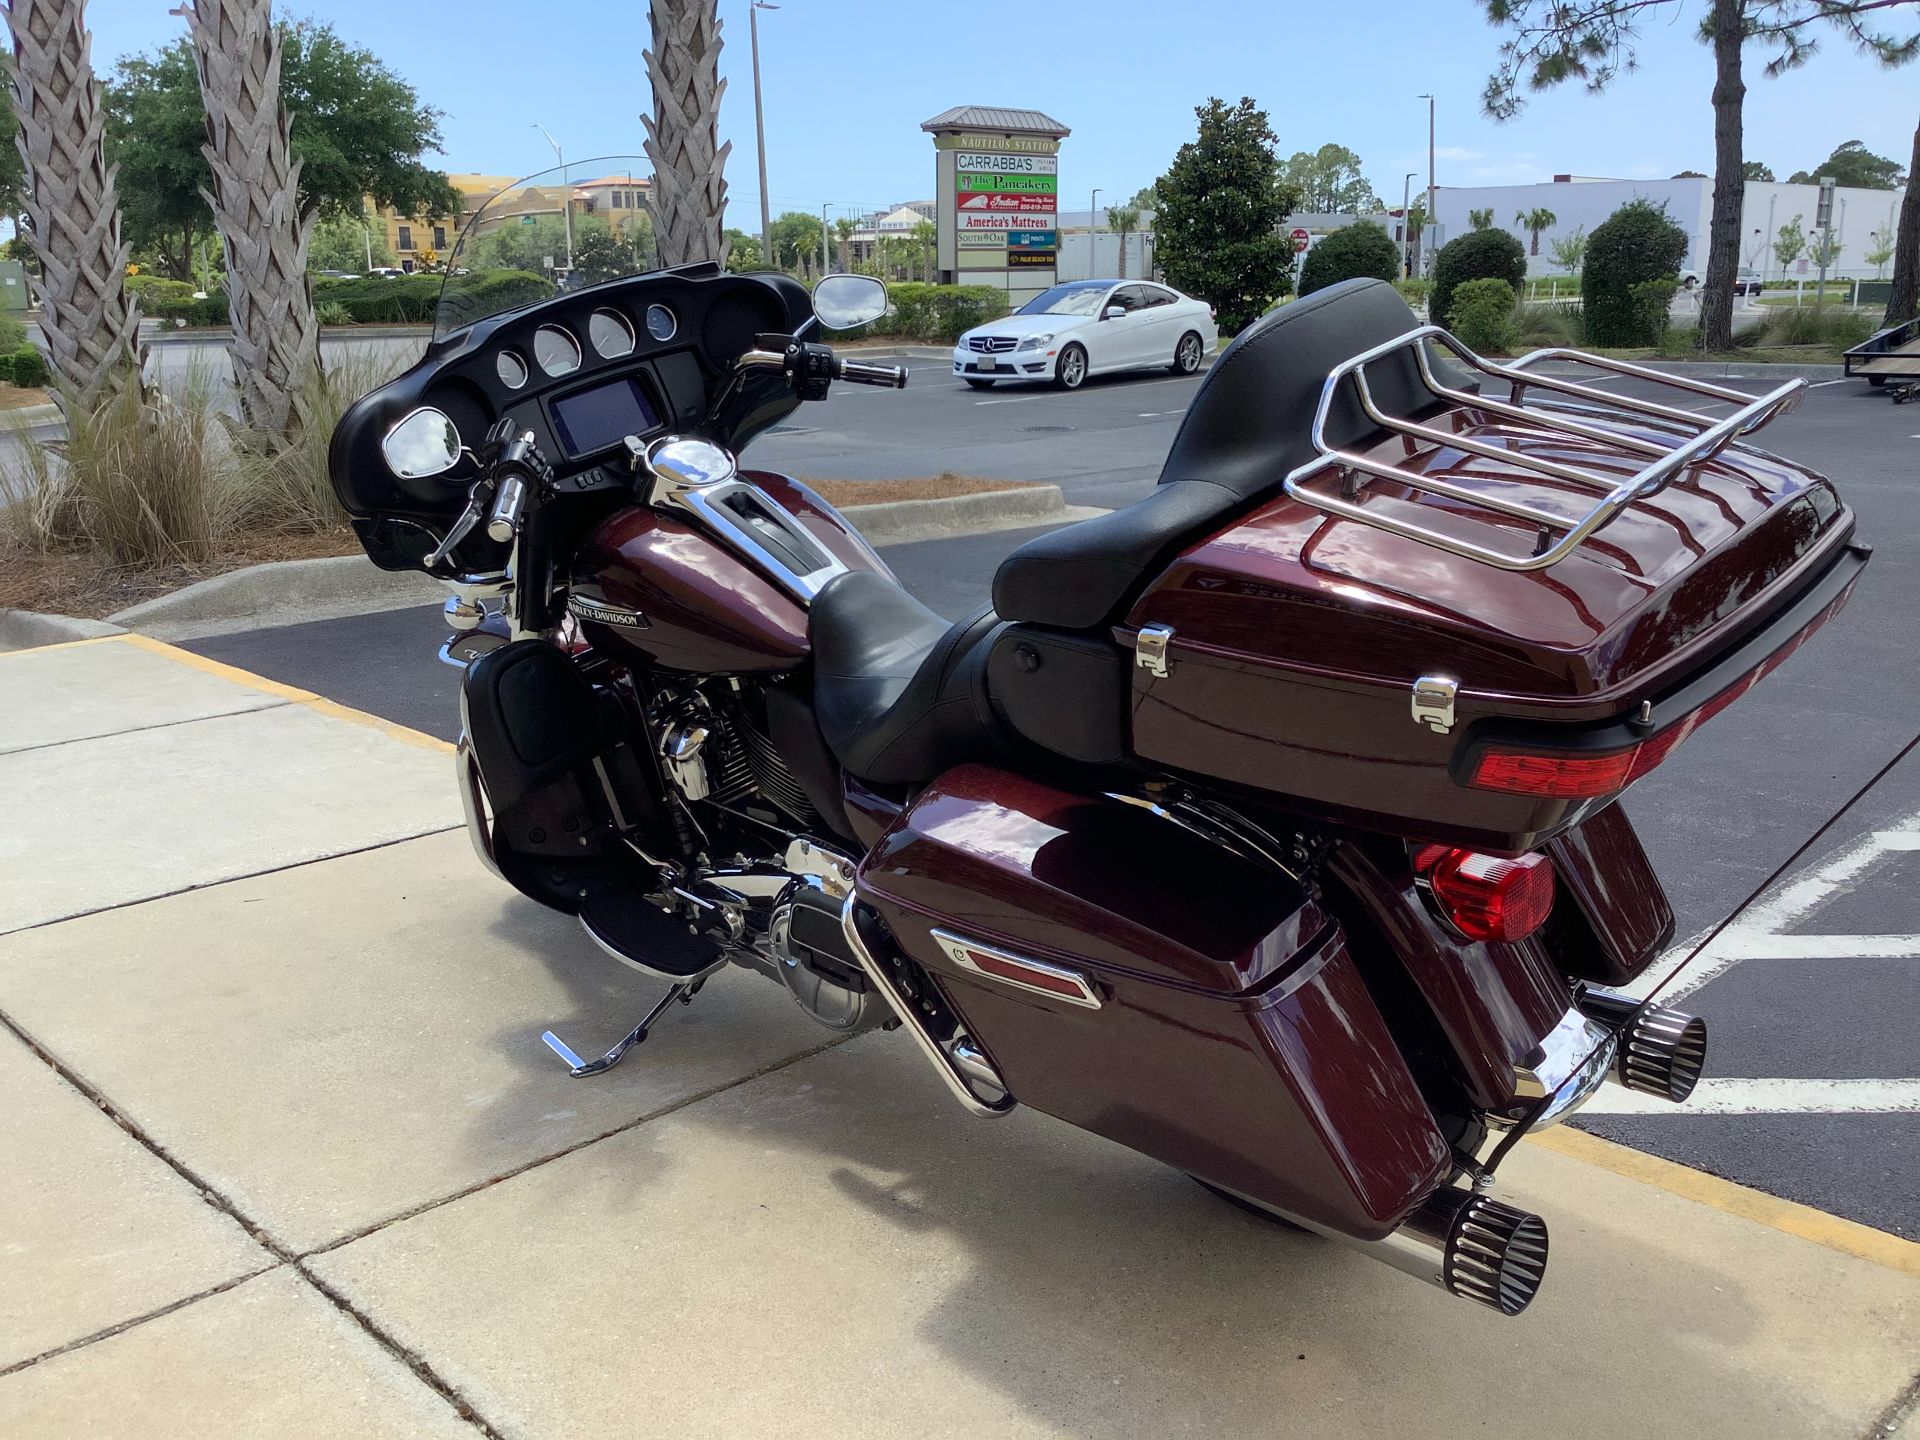 2019 Harley-Davidson FLHTCU in Panama City Beach, Florida - Photo 9